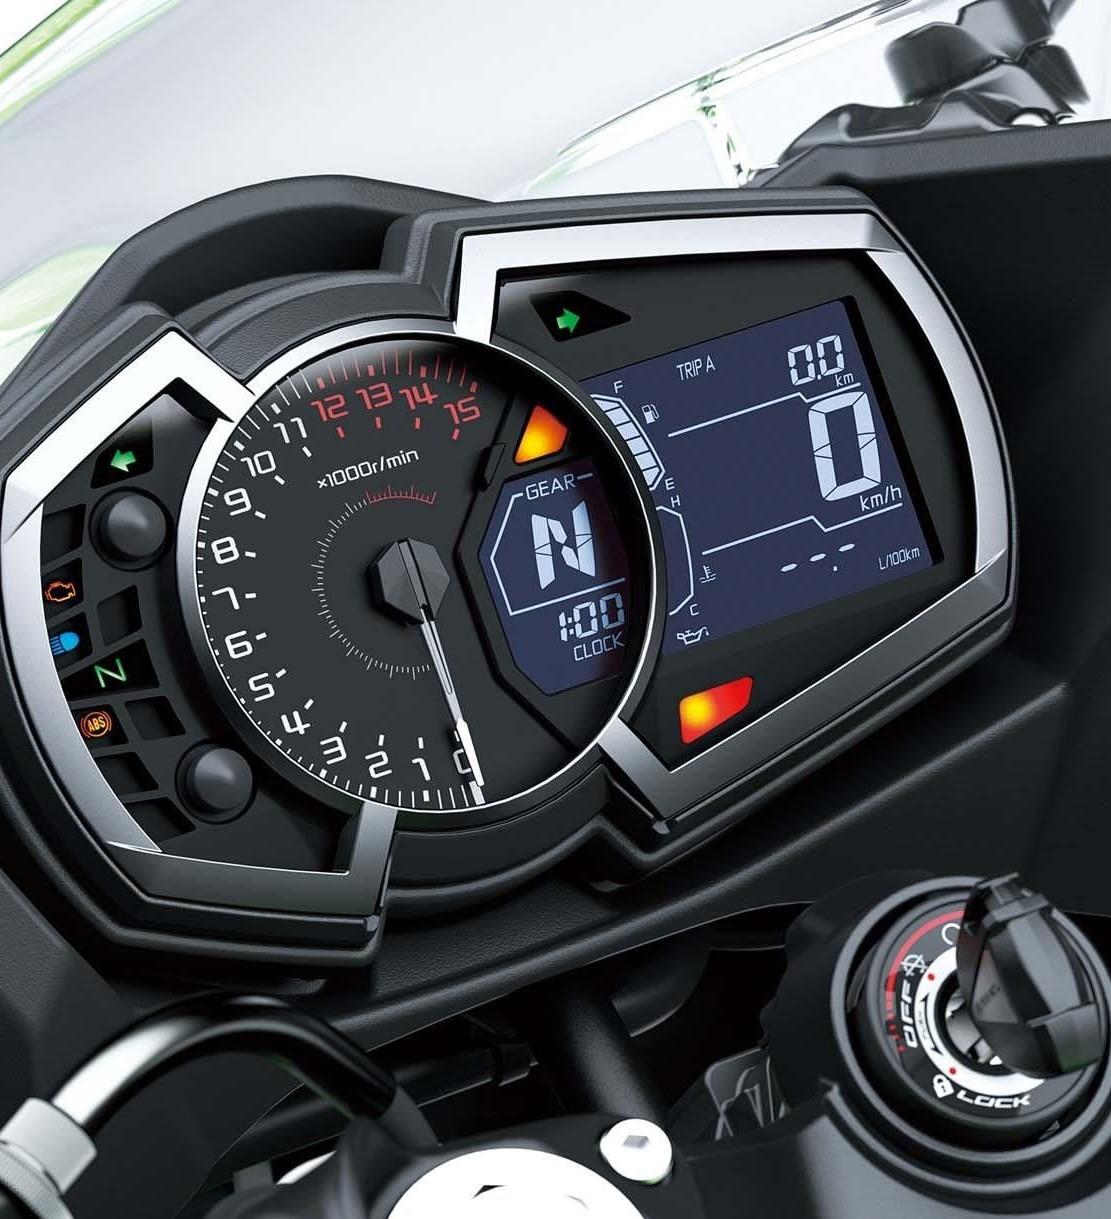 Samle fabrik arabisk 2022 Kawasaki Ninja 250 Specifications and Expected Price in India